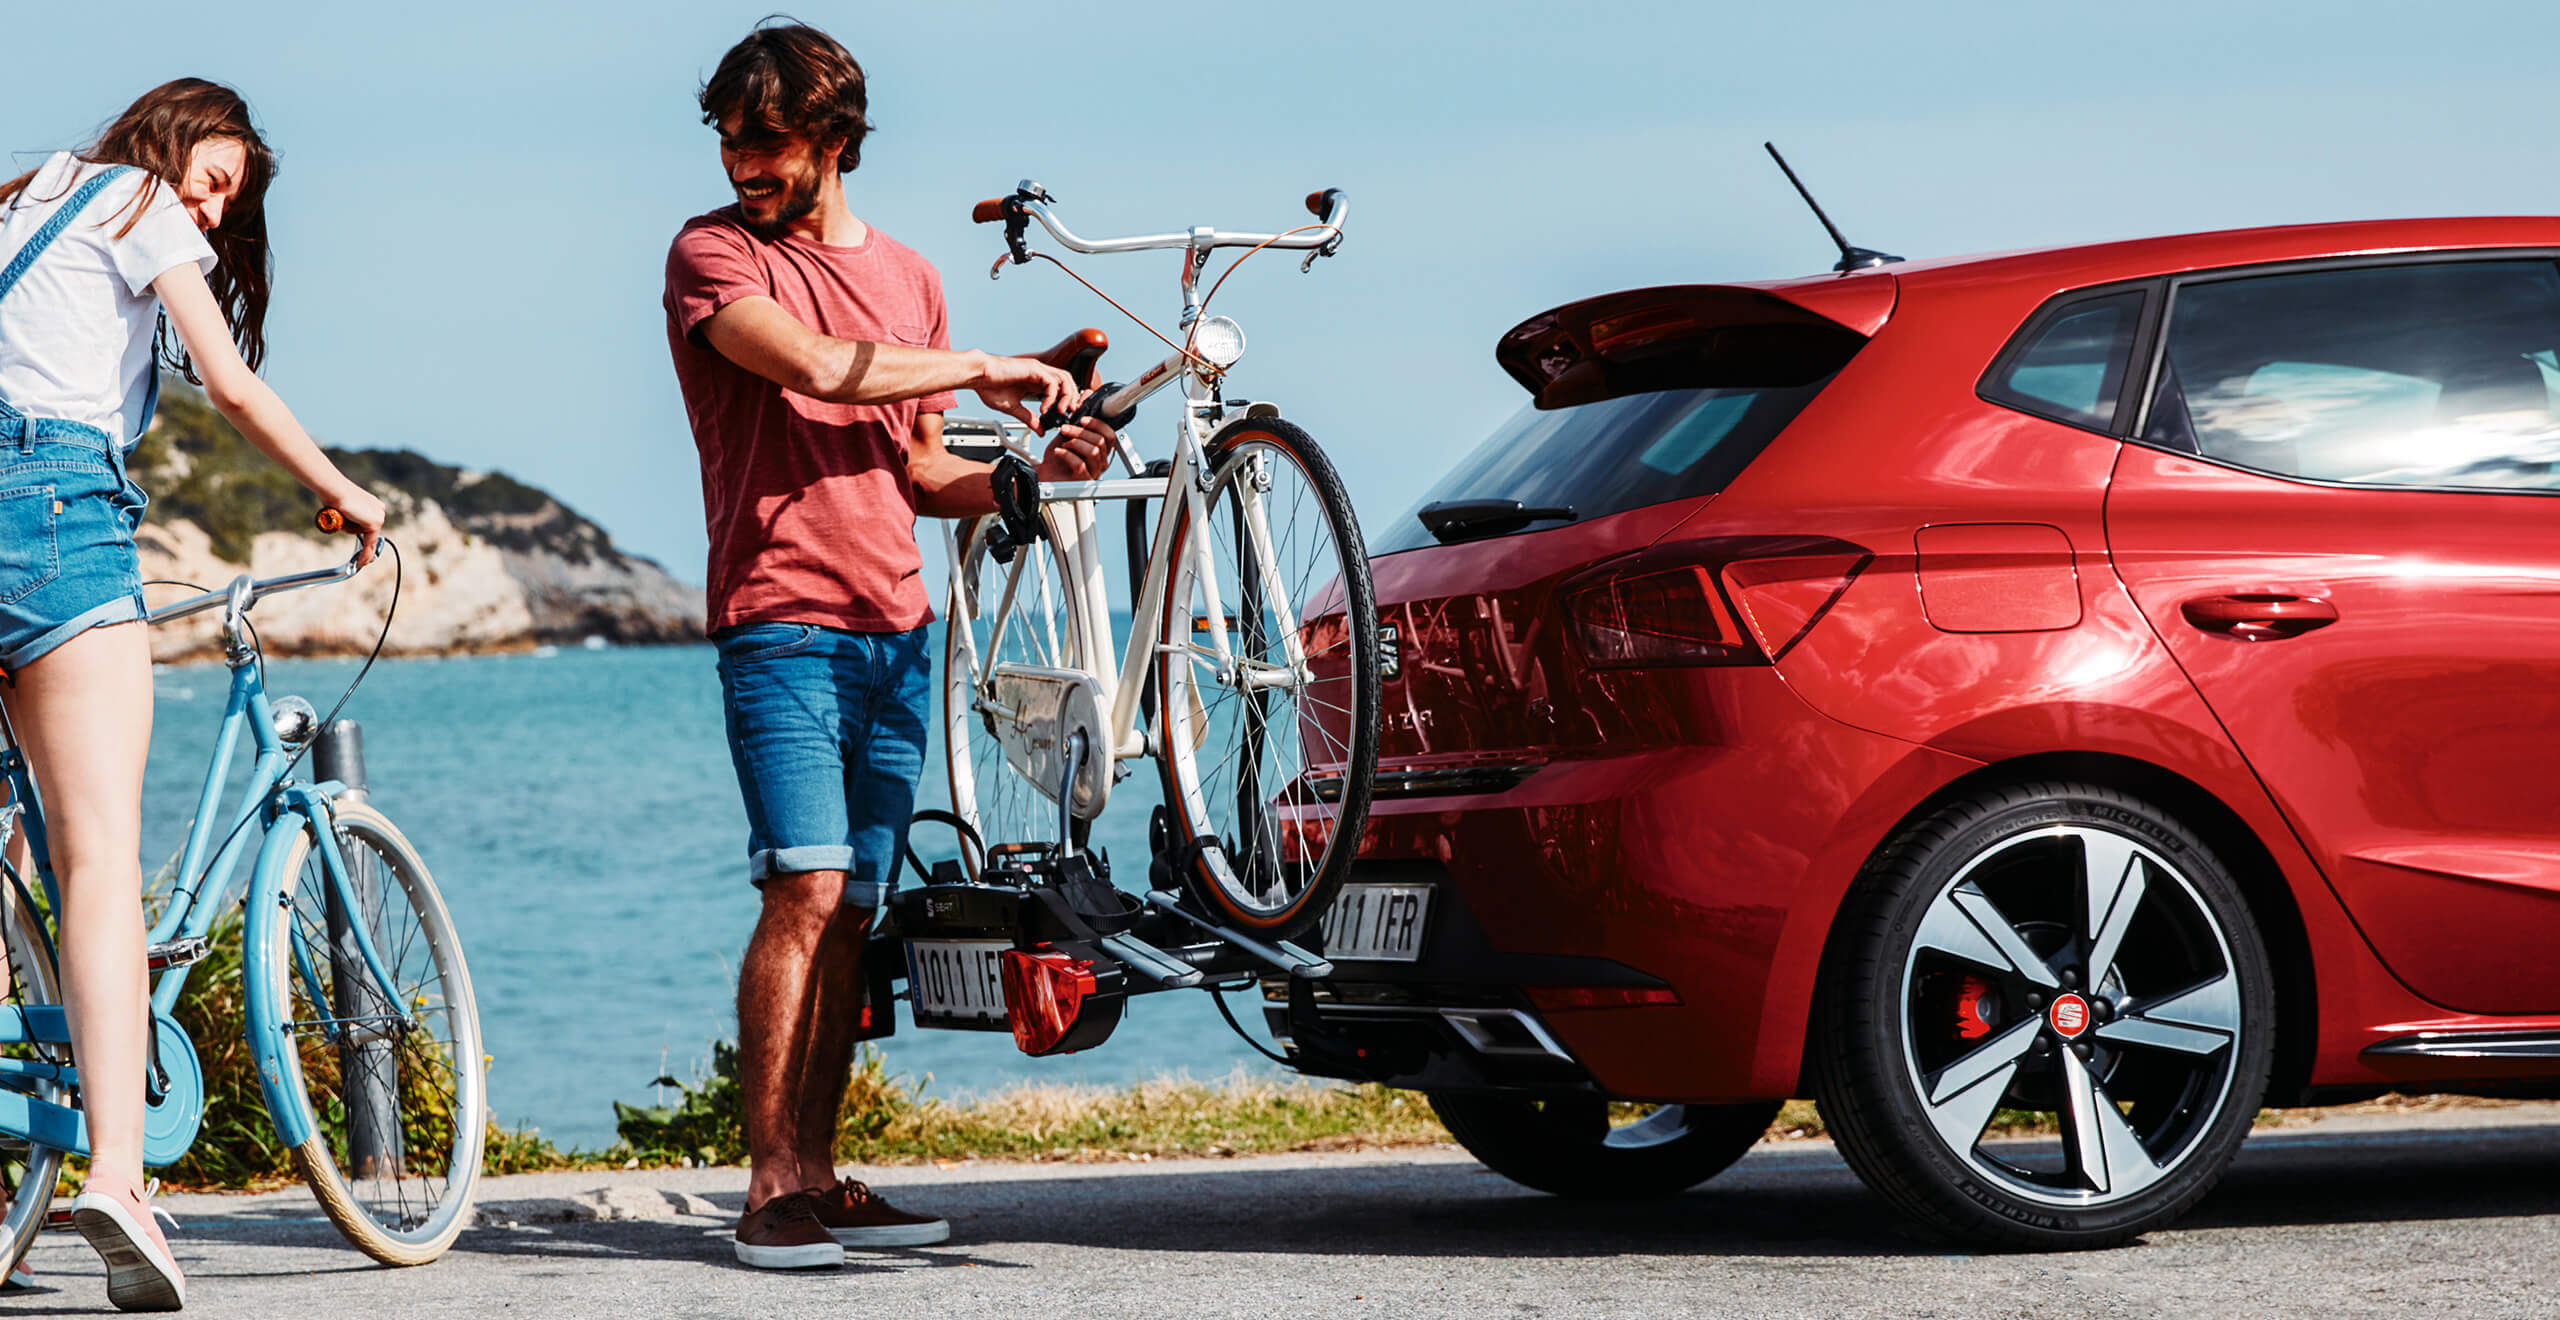 SEAT Ibiza exterior bike accessory solutions